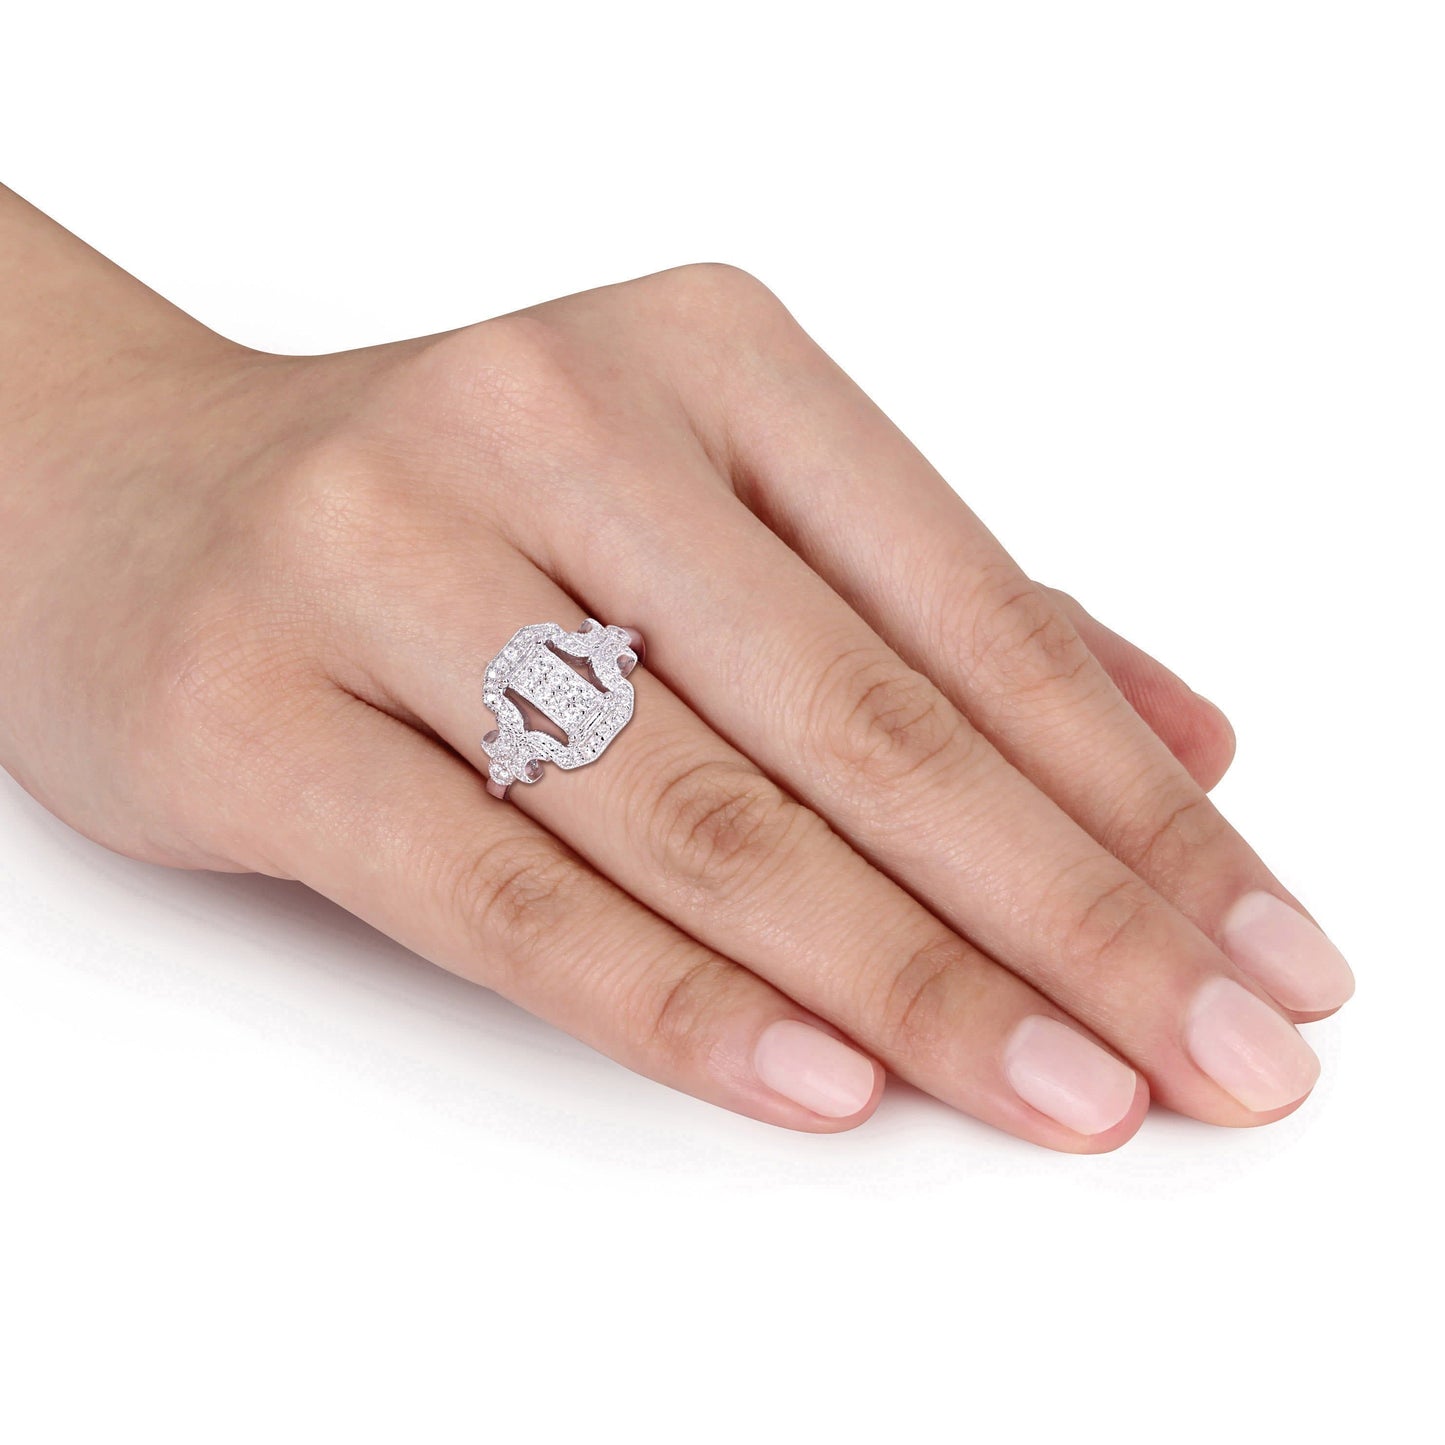 Julie Leah Diamond Art Deco Ring in 10k White Gold